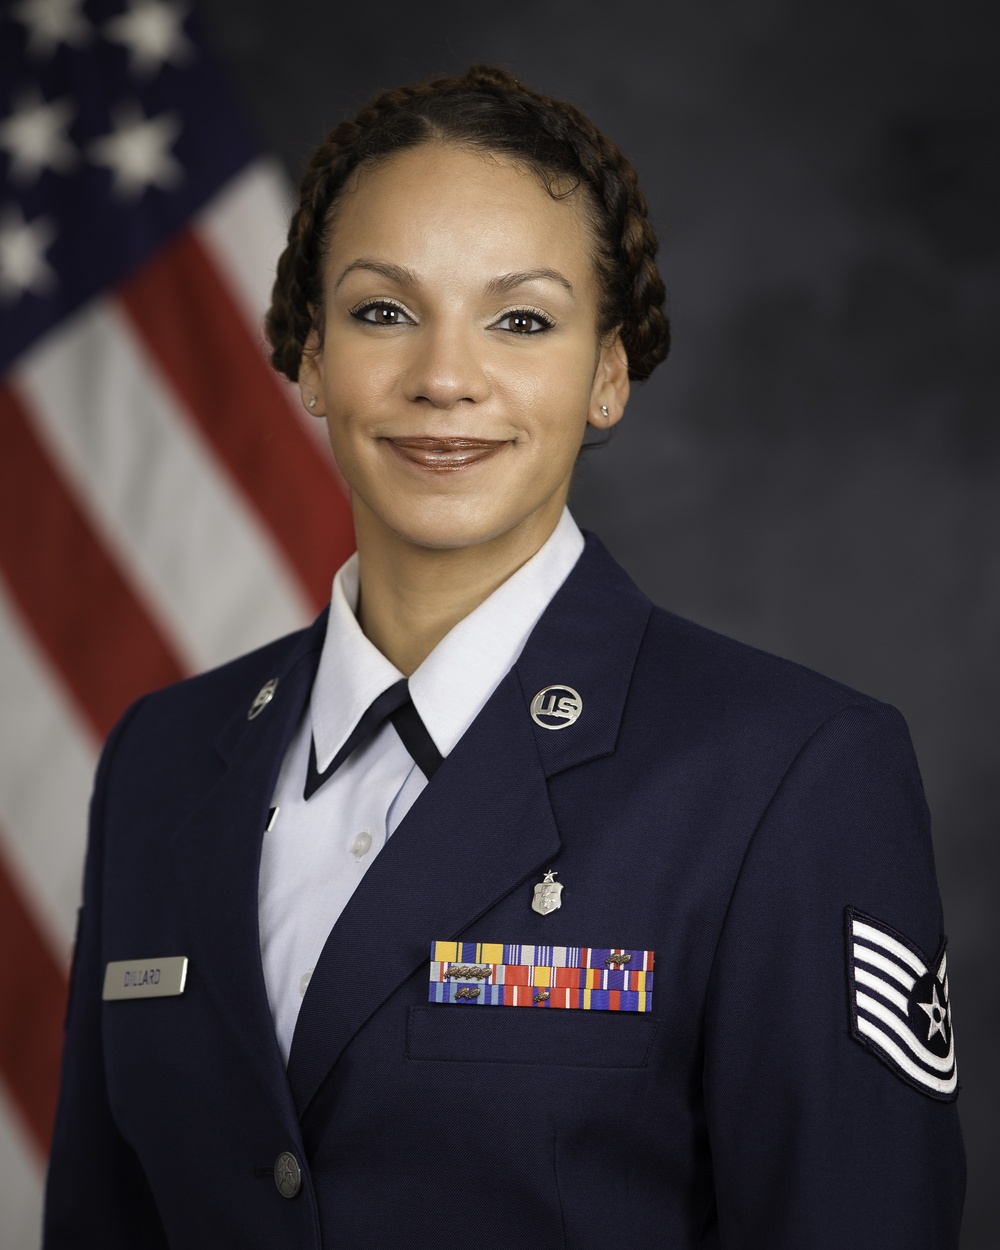 Official portrait of Tech Sgt. Nailah D. Dillard, US Air Force